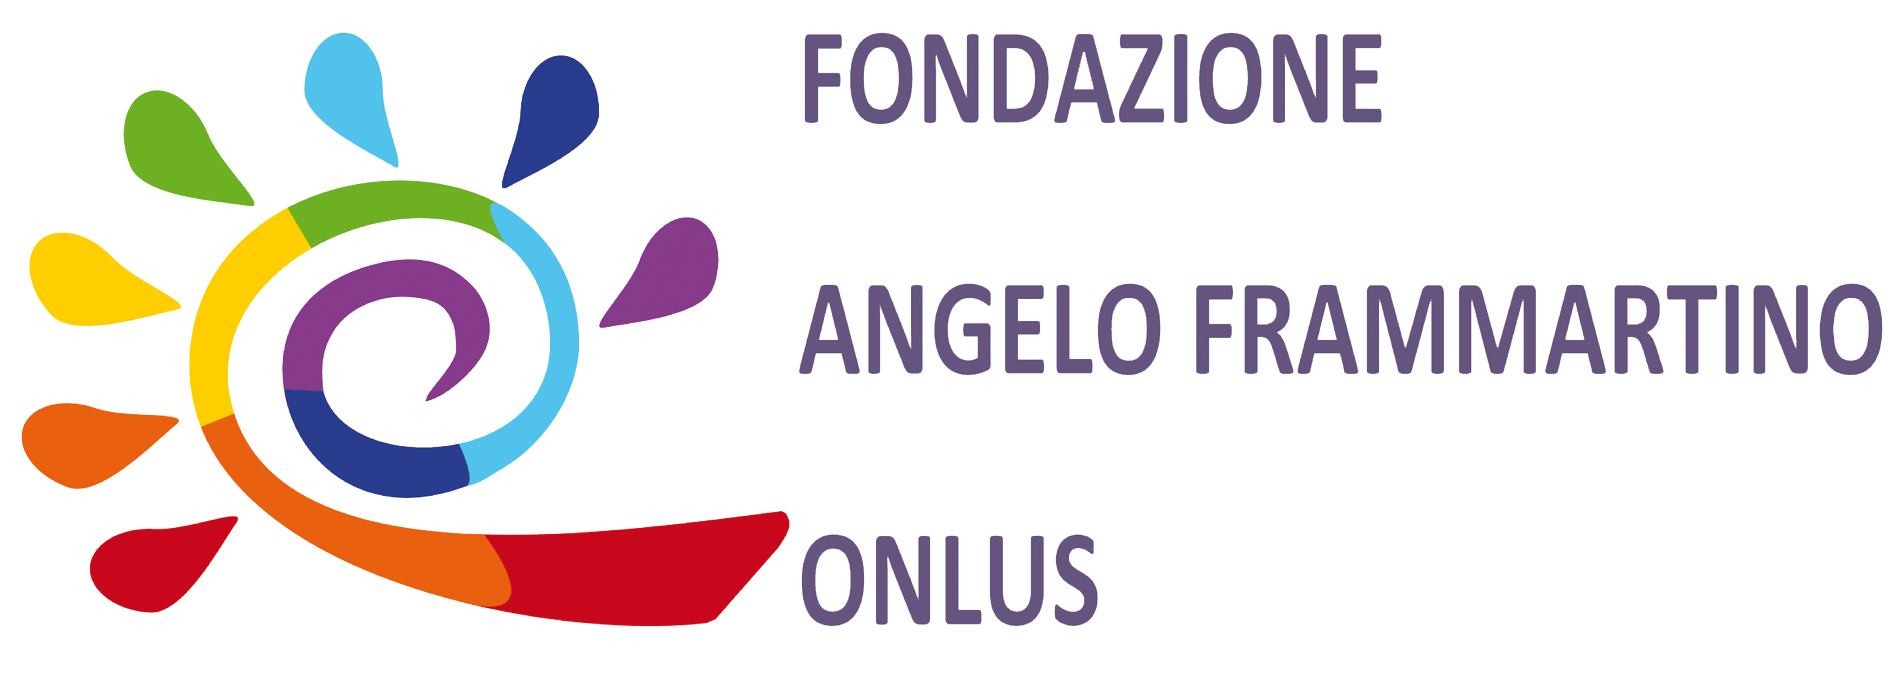 Fondazione Angelo Frammartino ONLUS